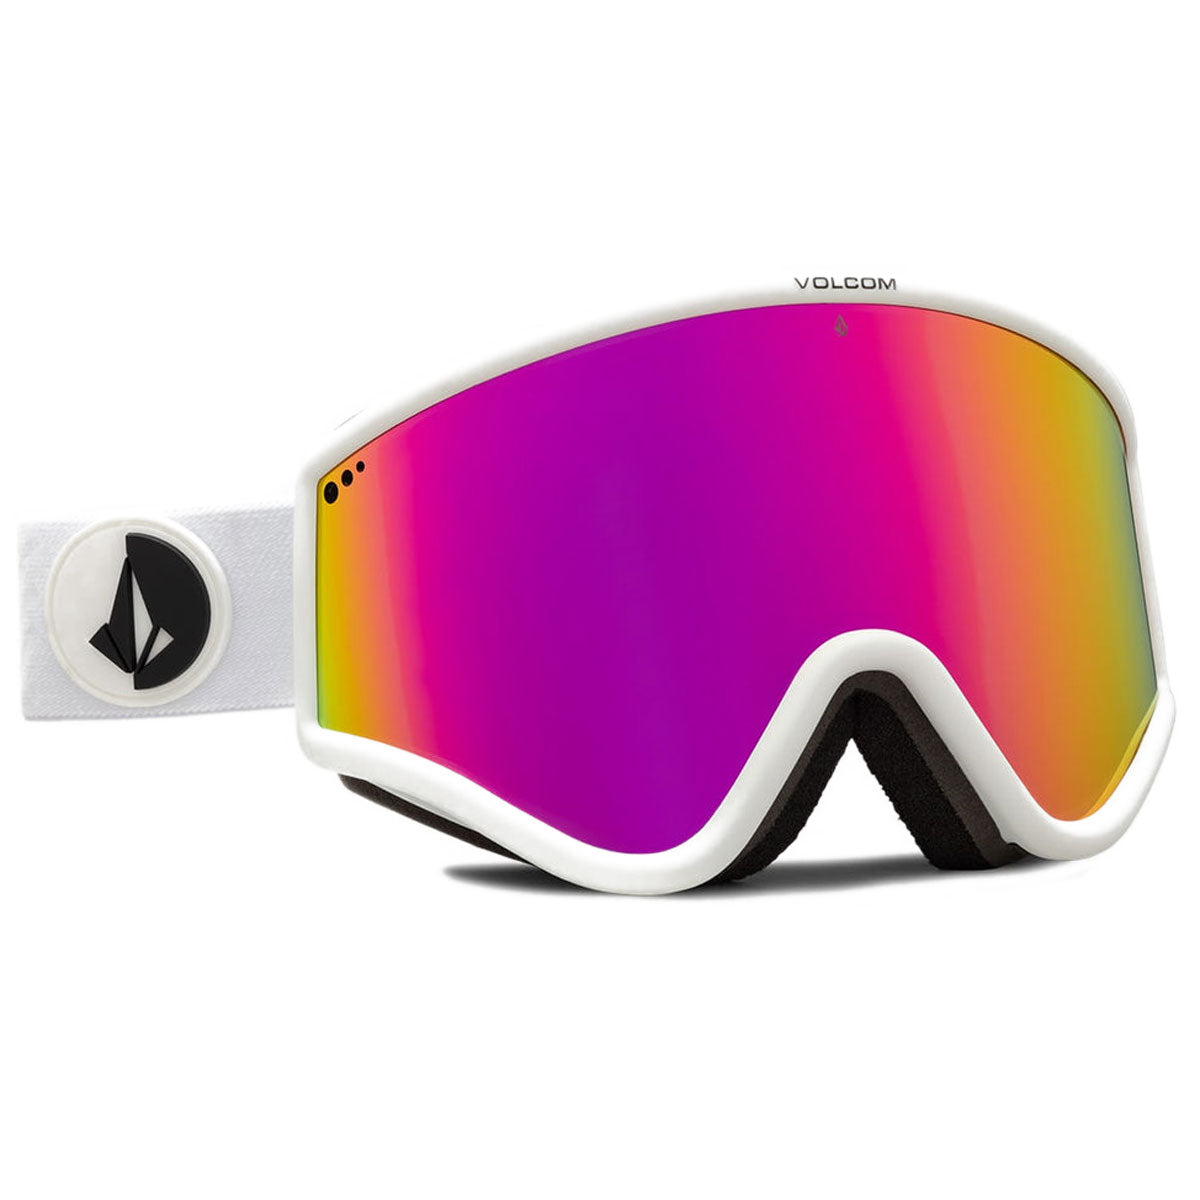 Volcom Yae Snowboard Goggles - Matte White/Pink Chrome image 3